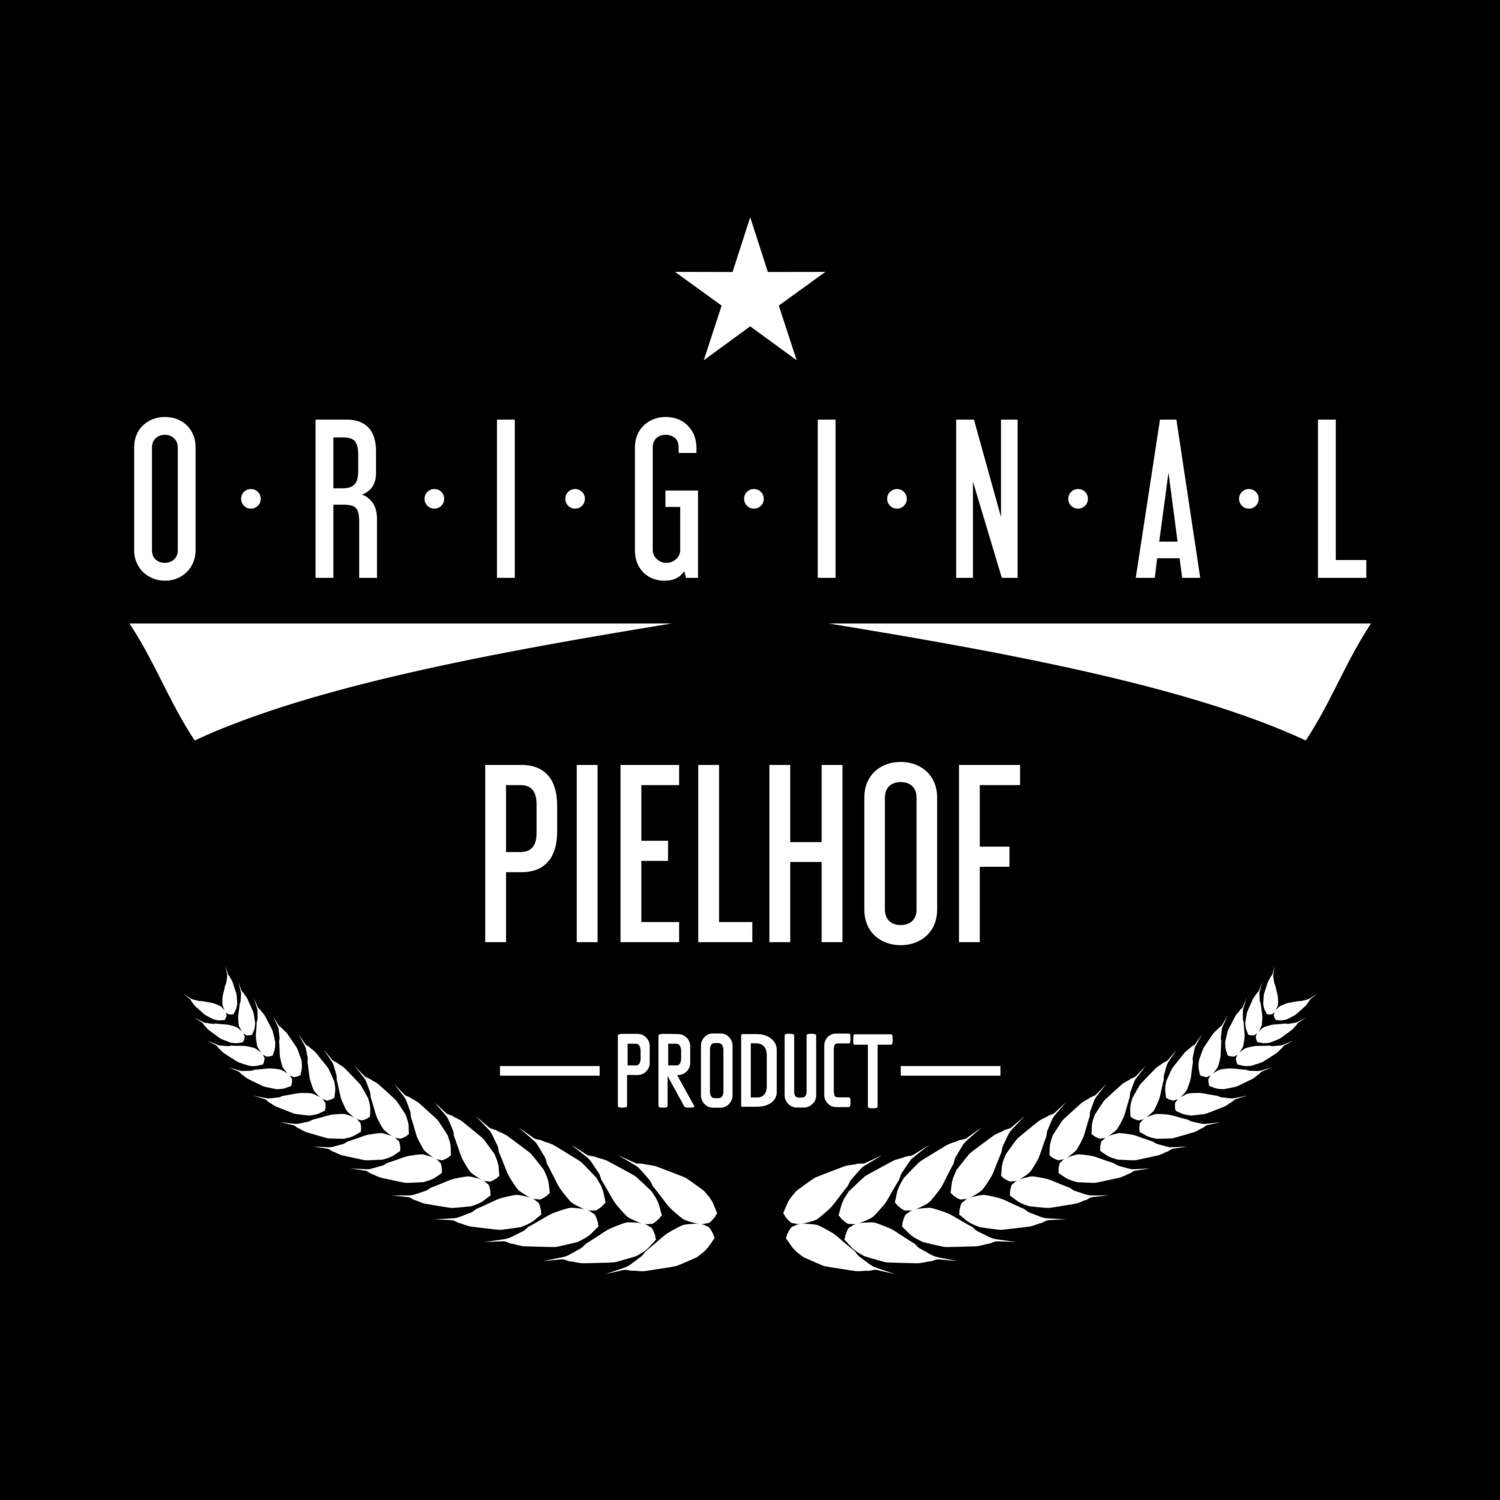 Pielhof T-Shirt »Original Product«